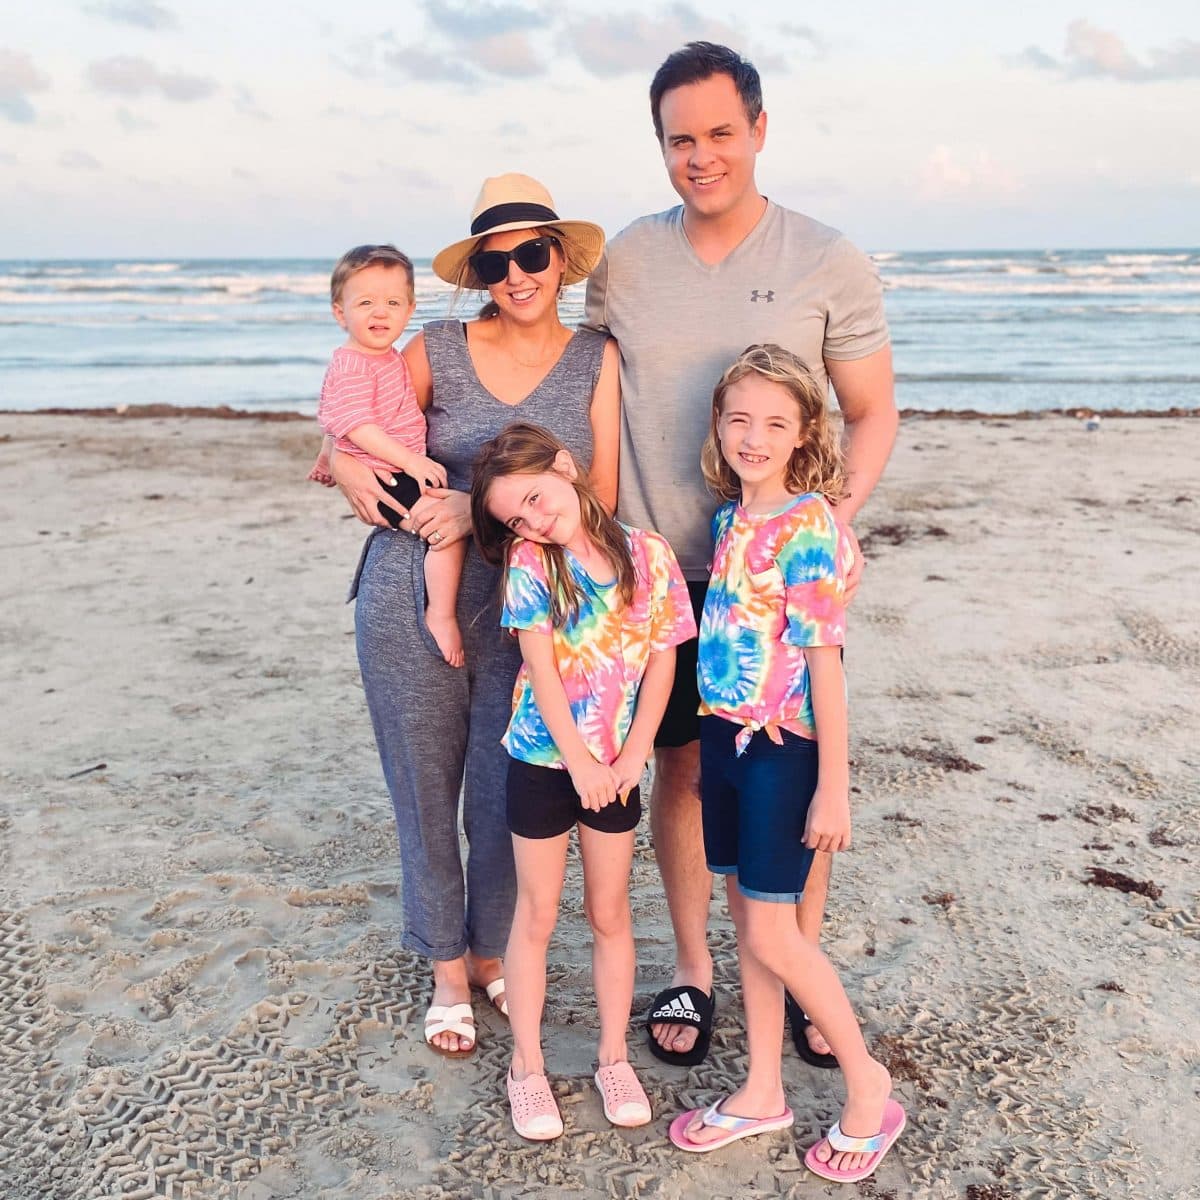 Port Aransas Beach - family trip to Port Aransas Texas 2020